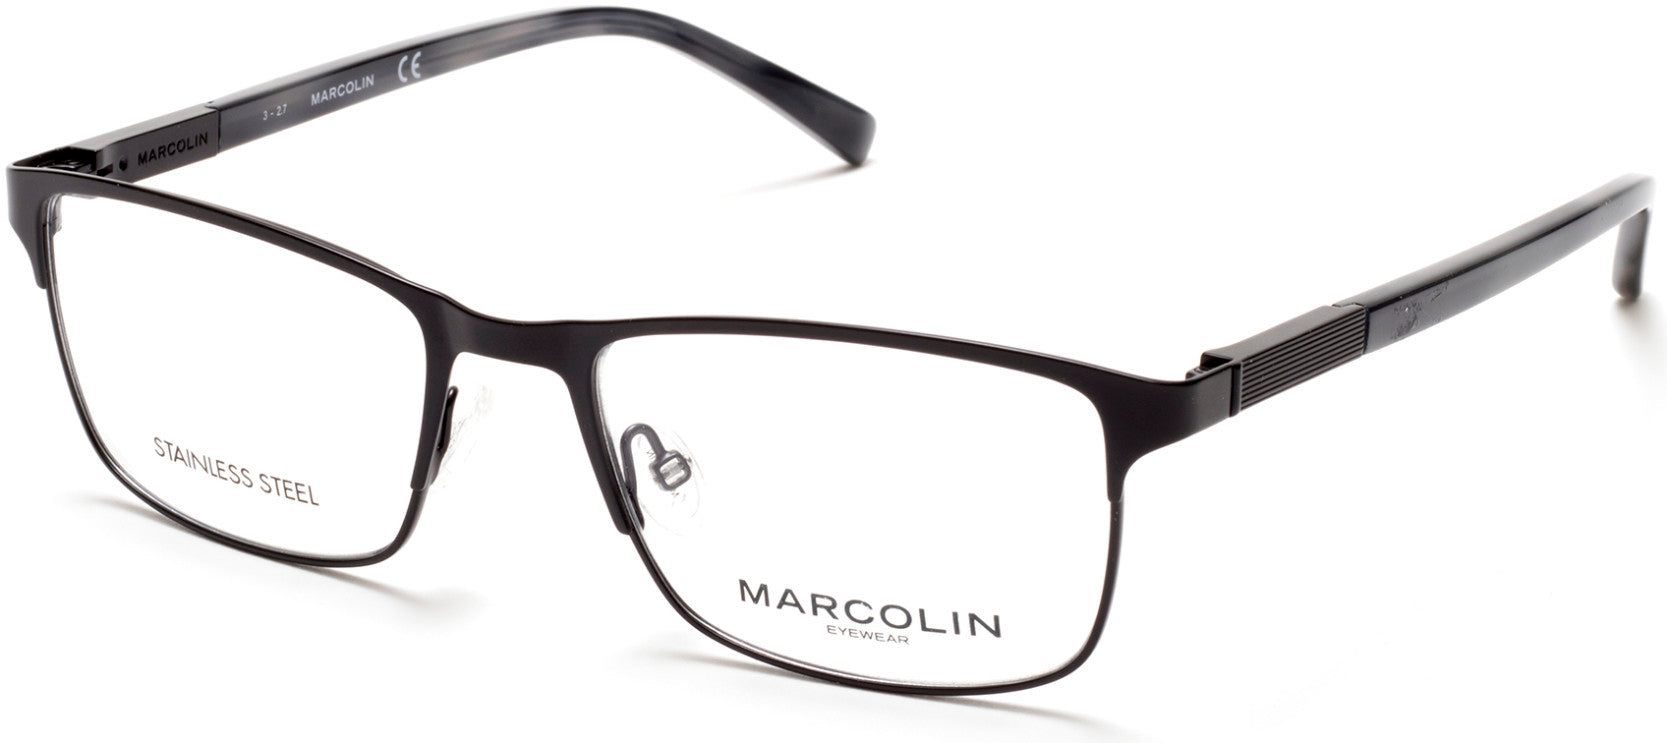 Marcolin MA3013 Geometric Eyeglasses 002-002 - Matte Black